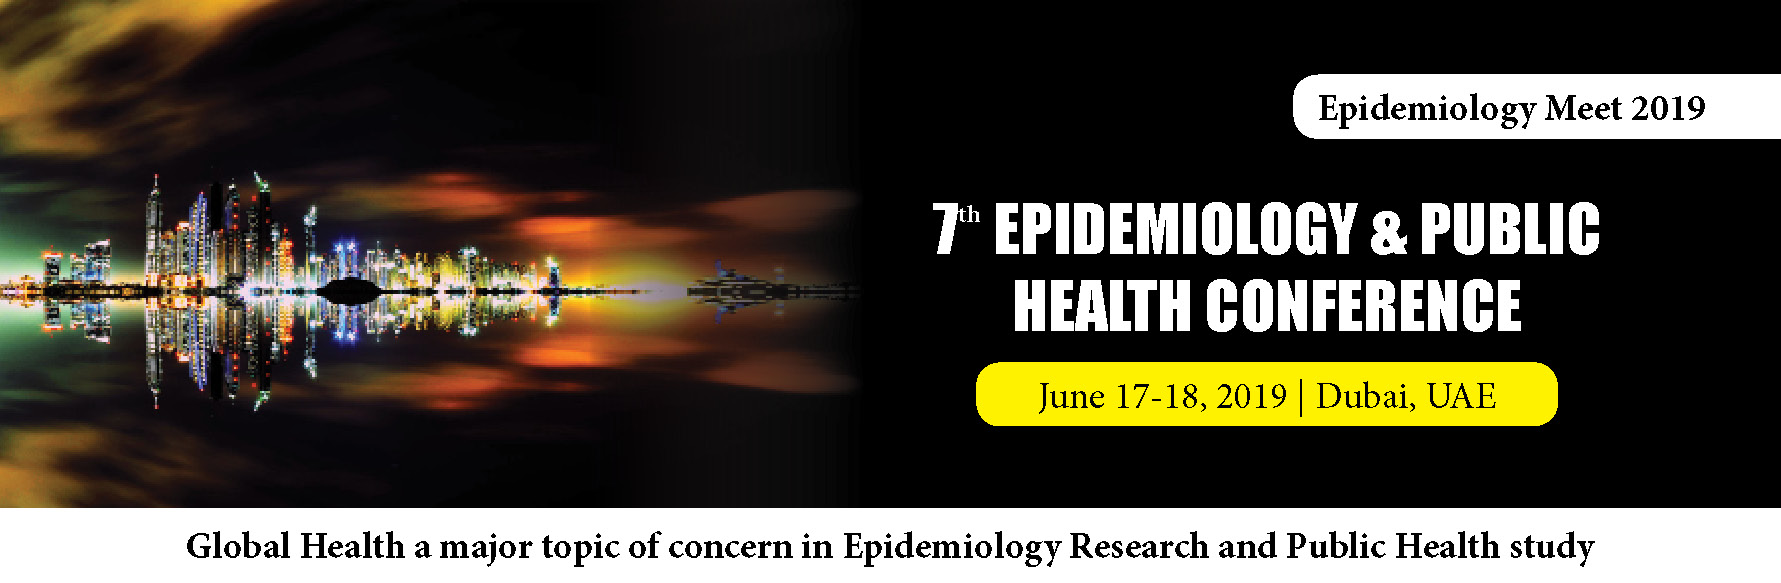 7th Epidemiology and Public Health Conference, Dubai, United Arab Emirates